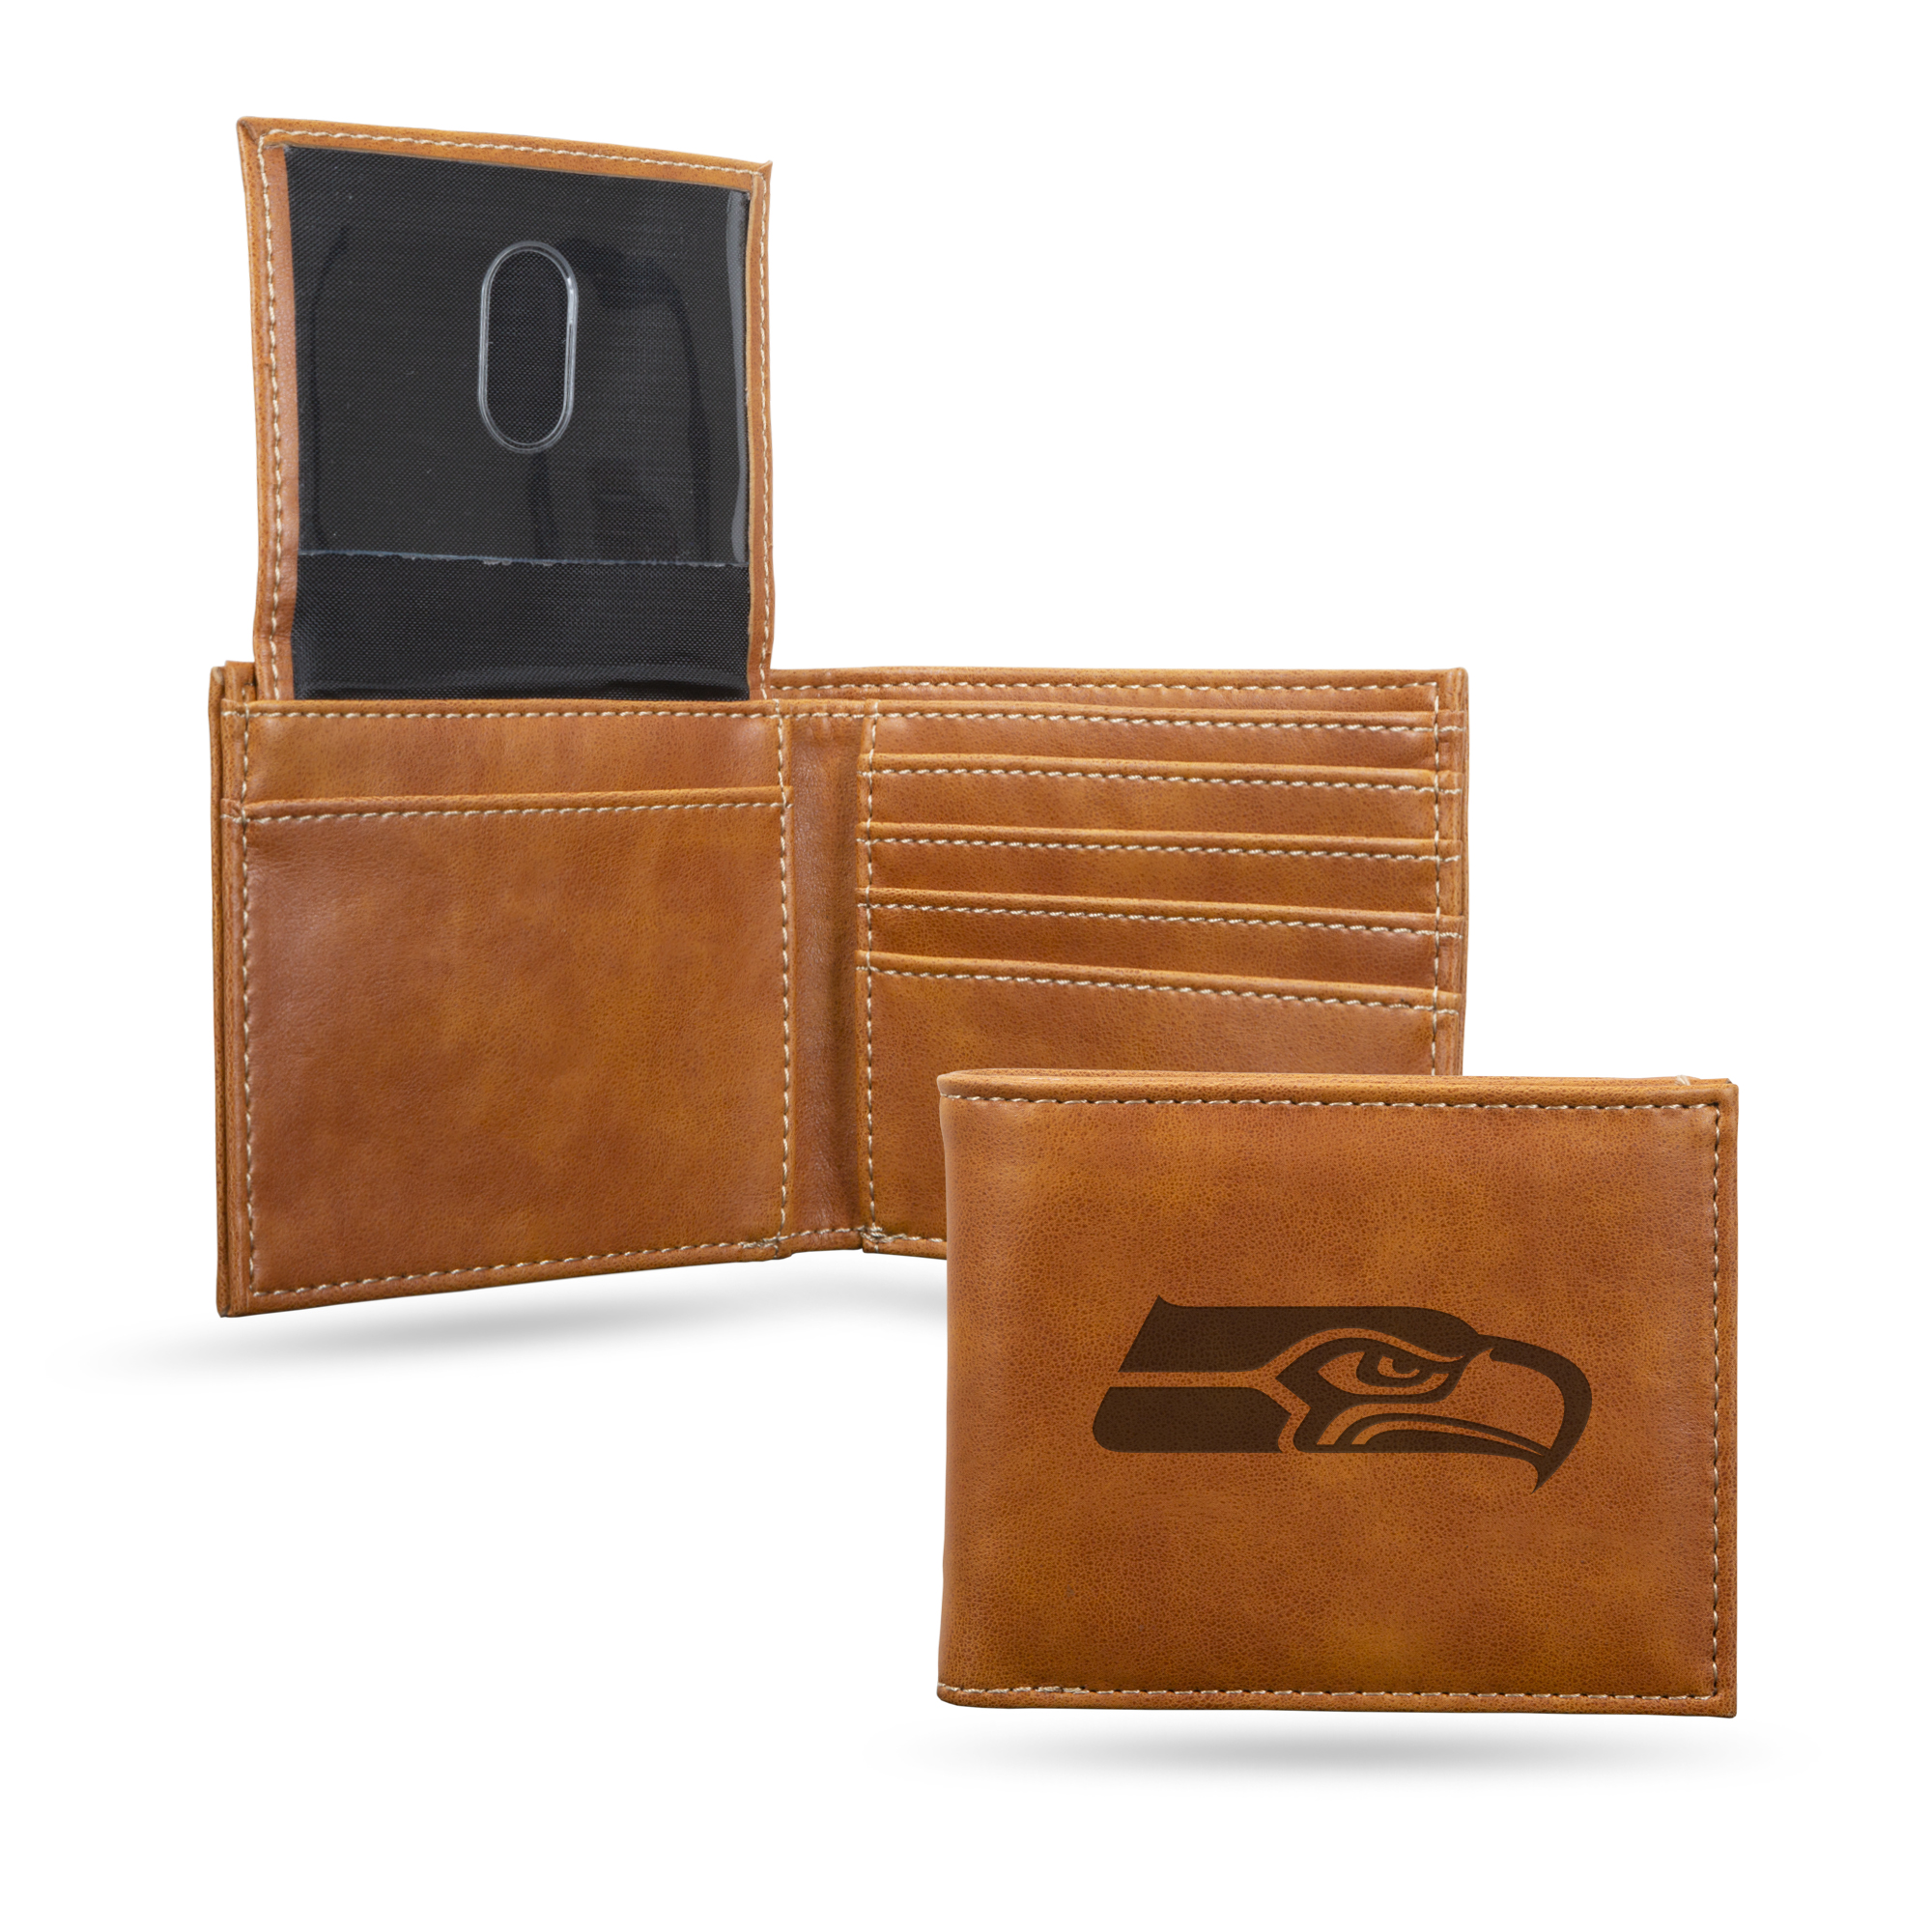 Rico Industries NFL Football Seattle Seahawks Brown Laser Engraved Billfold Wallet